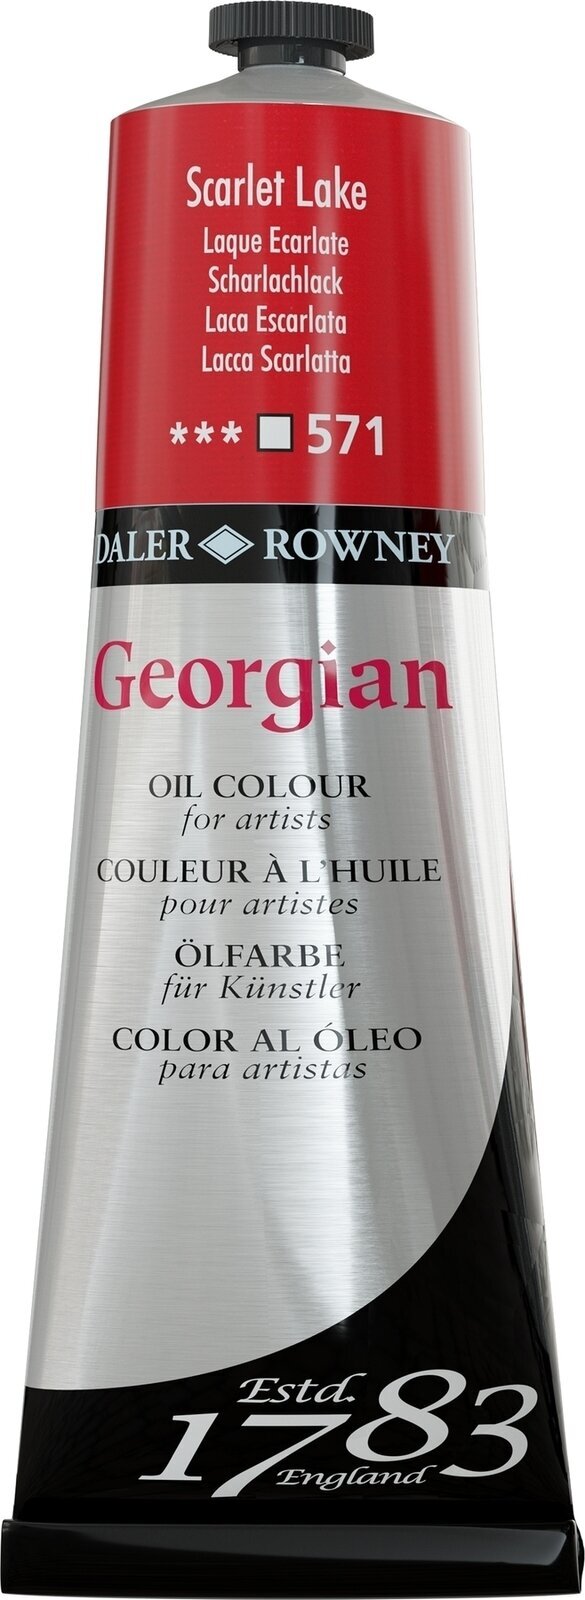 Oil colour Daler Rowney Georgian Oil Paint Scarlet Lake 225 ml 1 pc